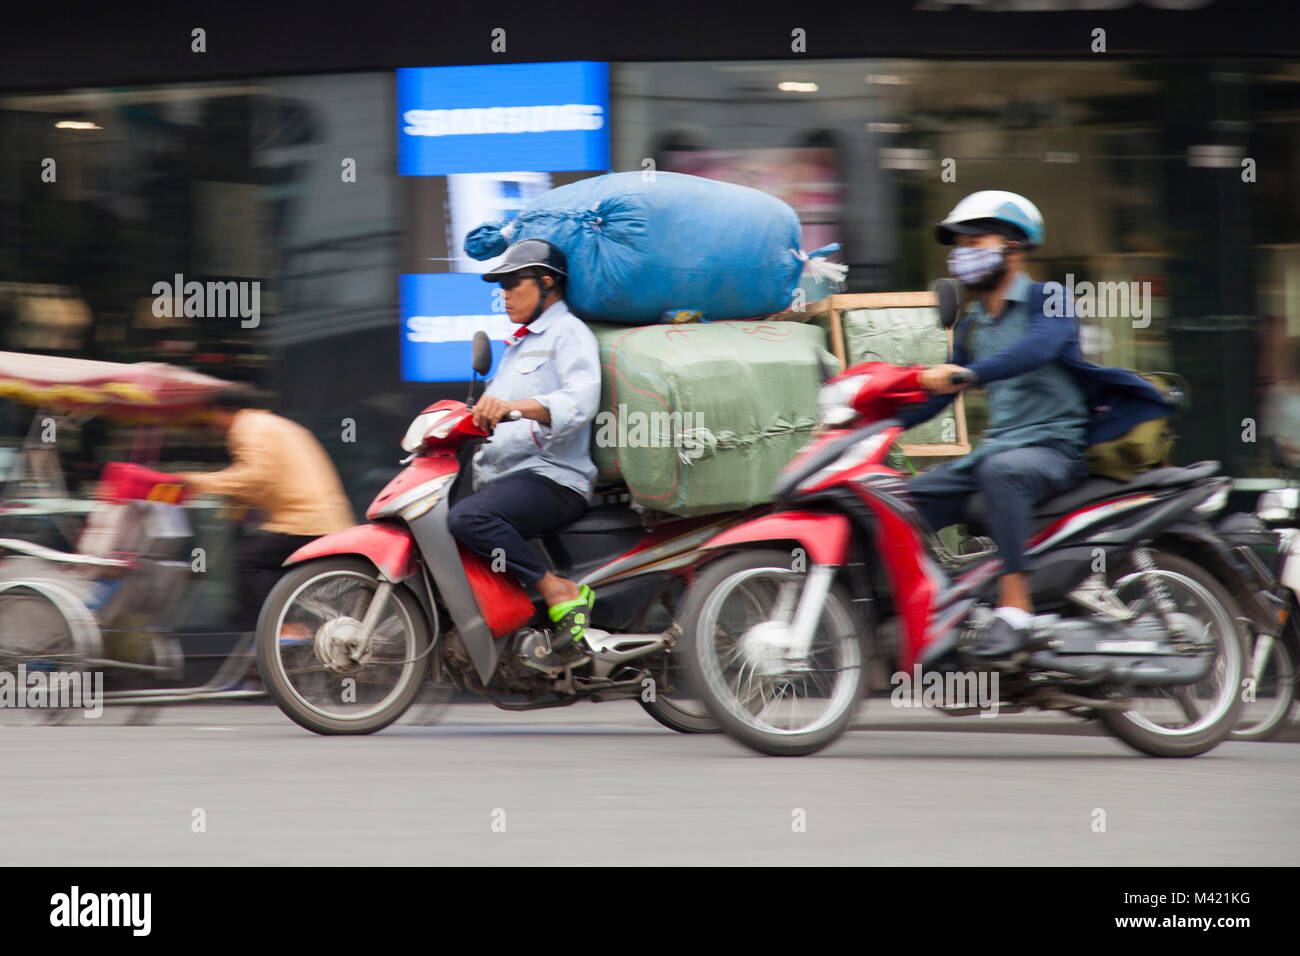 man on speeding scooter with cargo in Hanoi, Vietnam Stock Photo